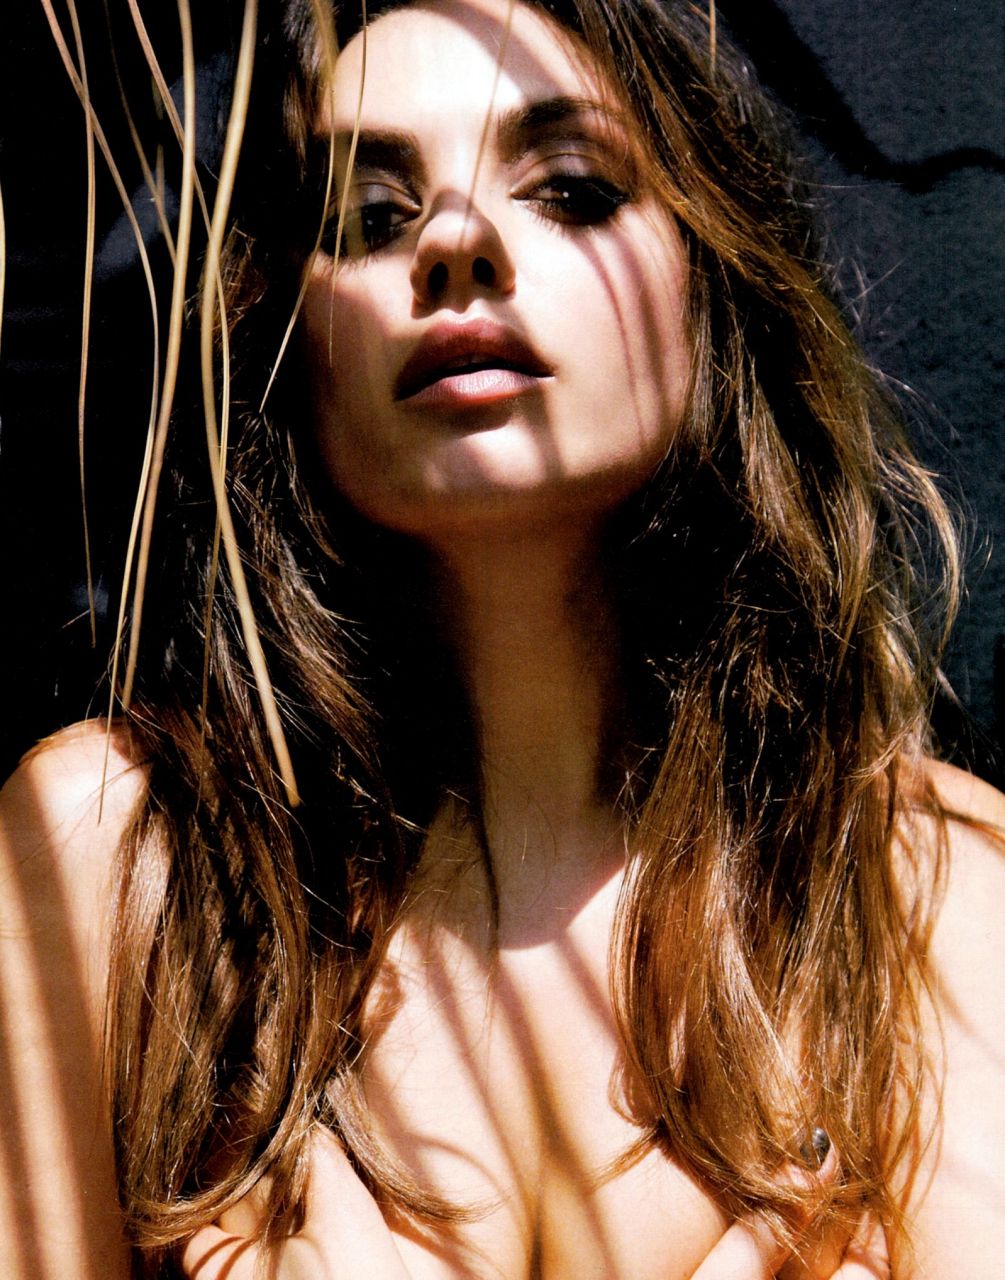 Mila Kunis - seksowna aktorka w Esquire